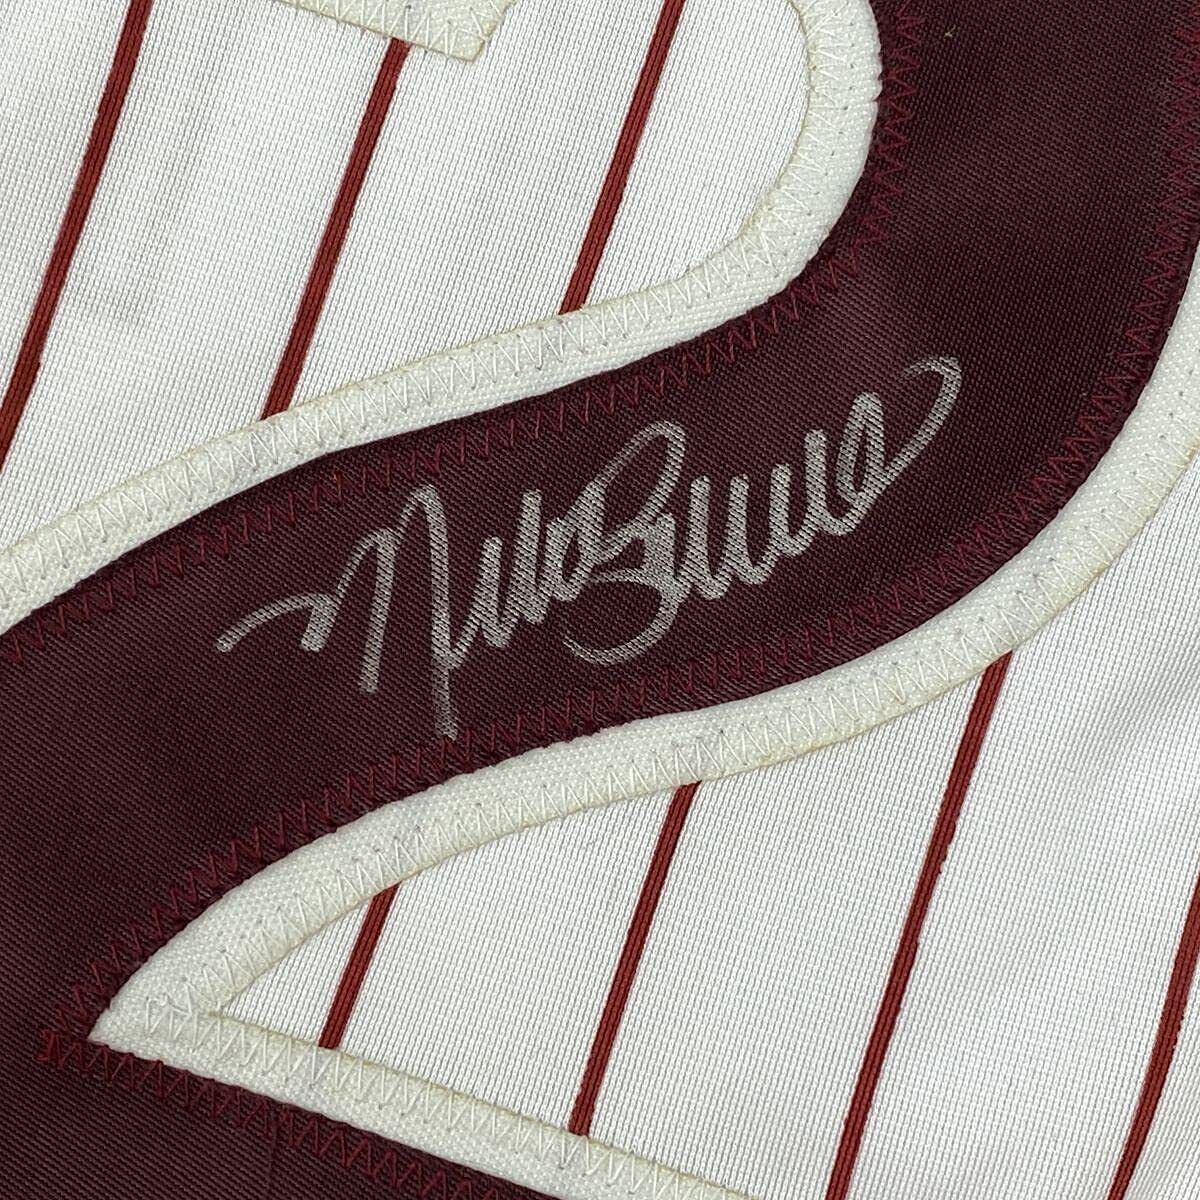 Mike Schmidt Autographed Jerseys, Signed Mike Schmidt Inscripted Jerseys